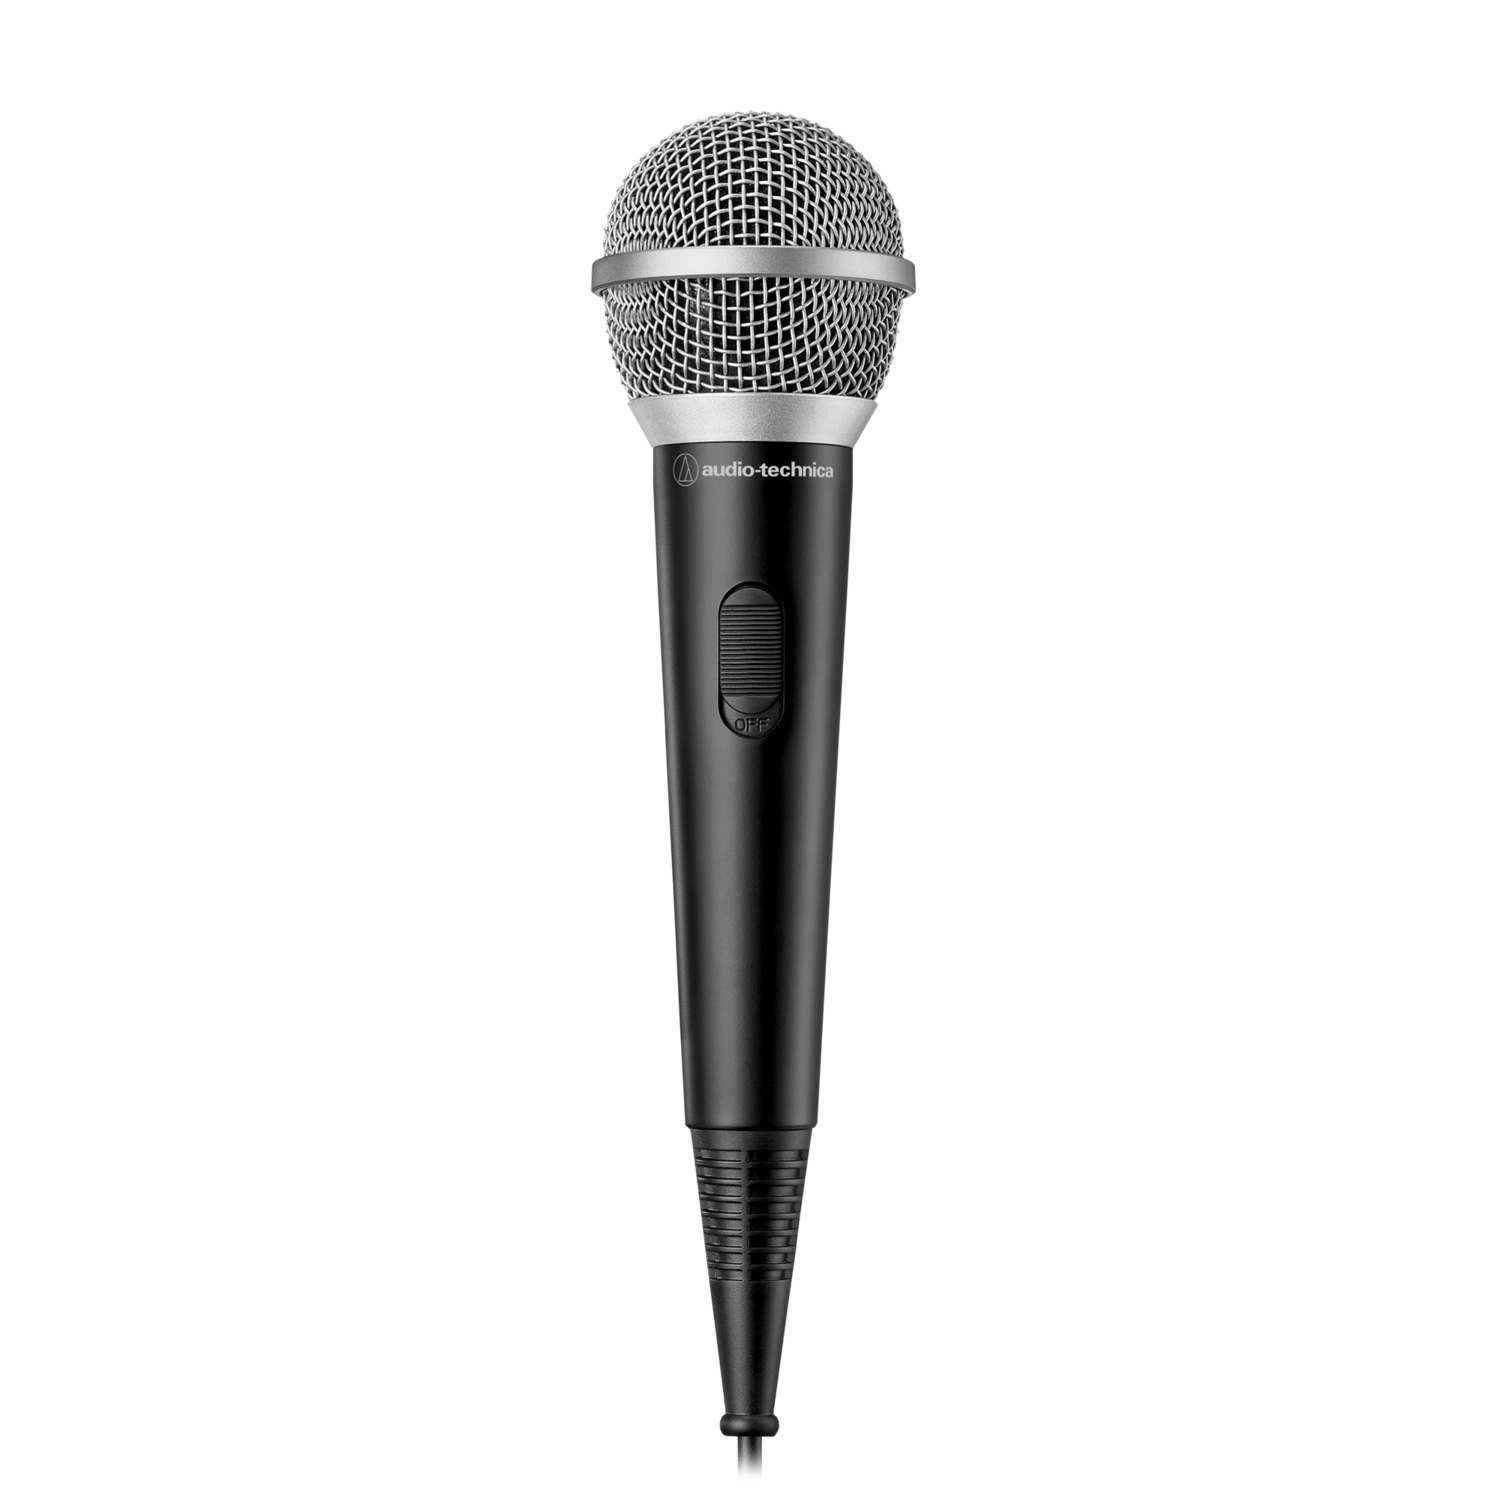 Audio Technica Unidirectional Dynamic Vocal/Instrument Microphone
ATR1200x